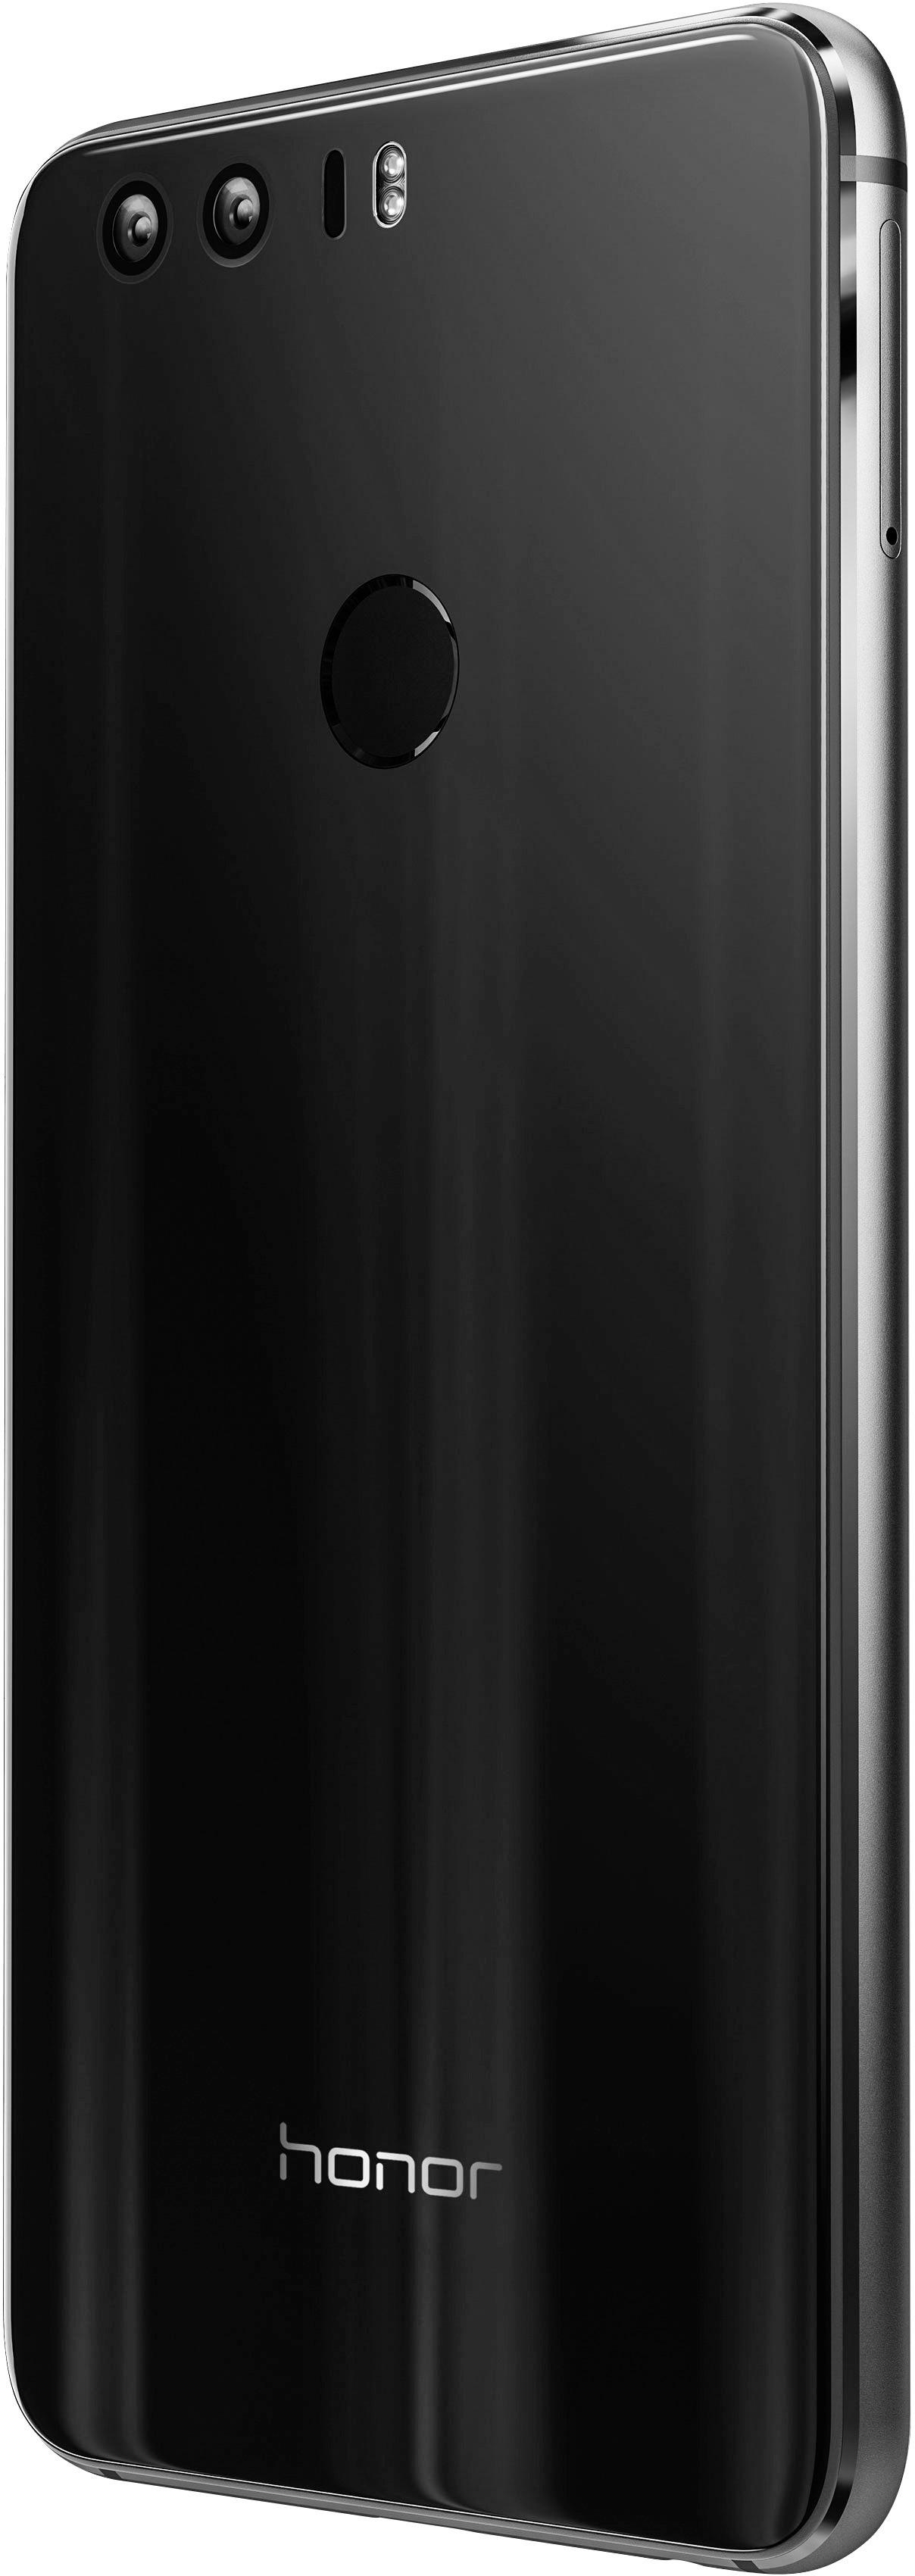 Waterig kever vasthoudend Best Buy: Huawei Honor 8 4G LTE with 32GB Memory Cell Phone (Unlocked)  Midnight black FRD-L04